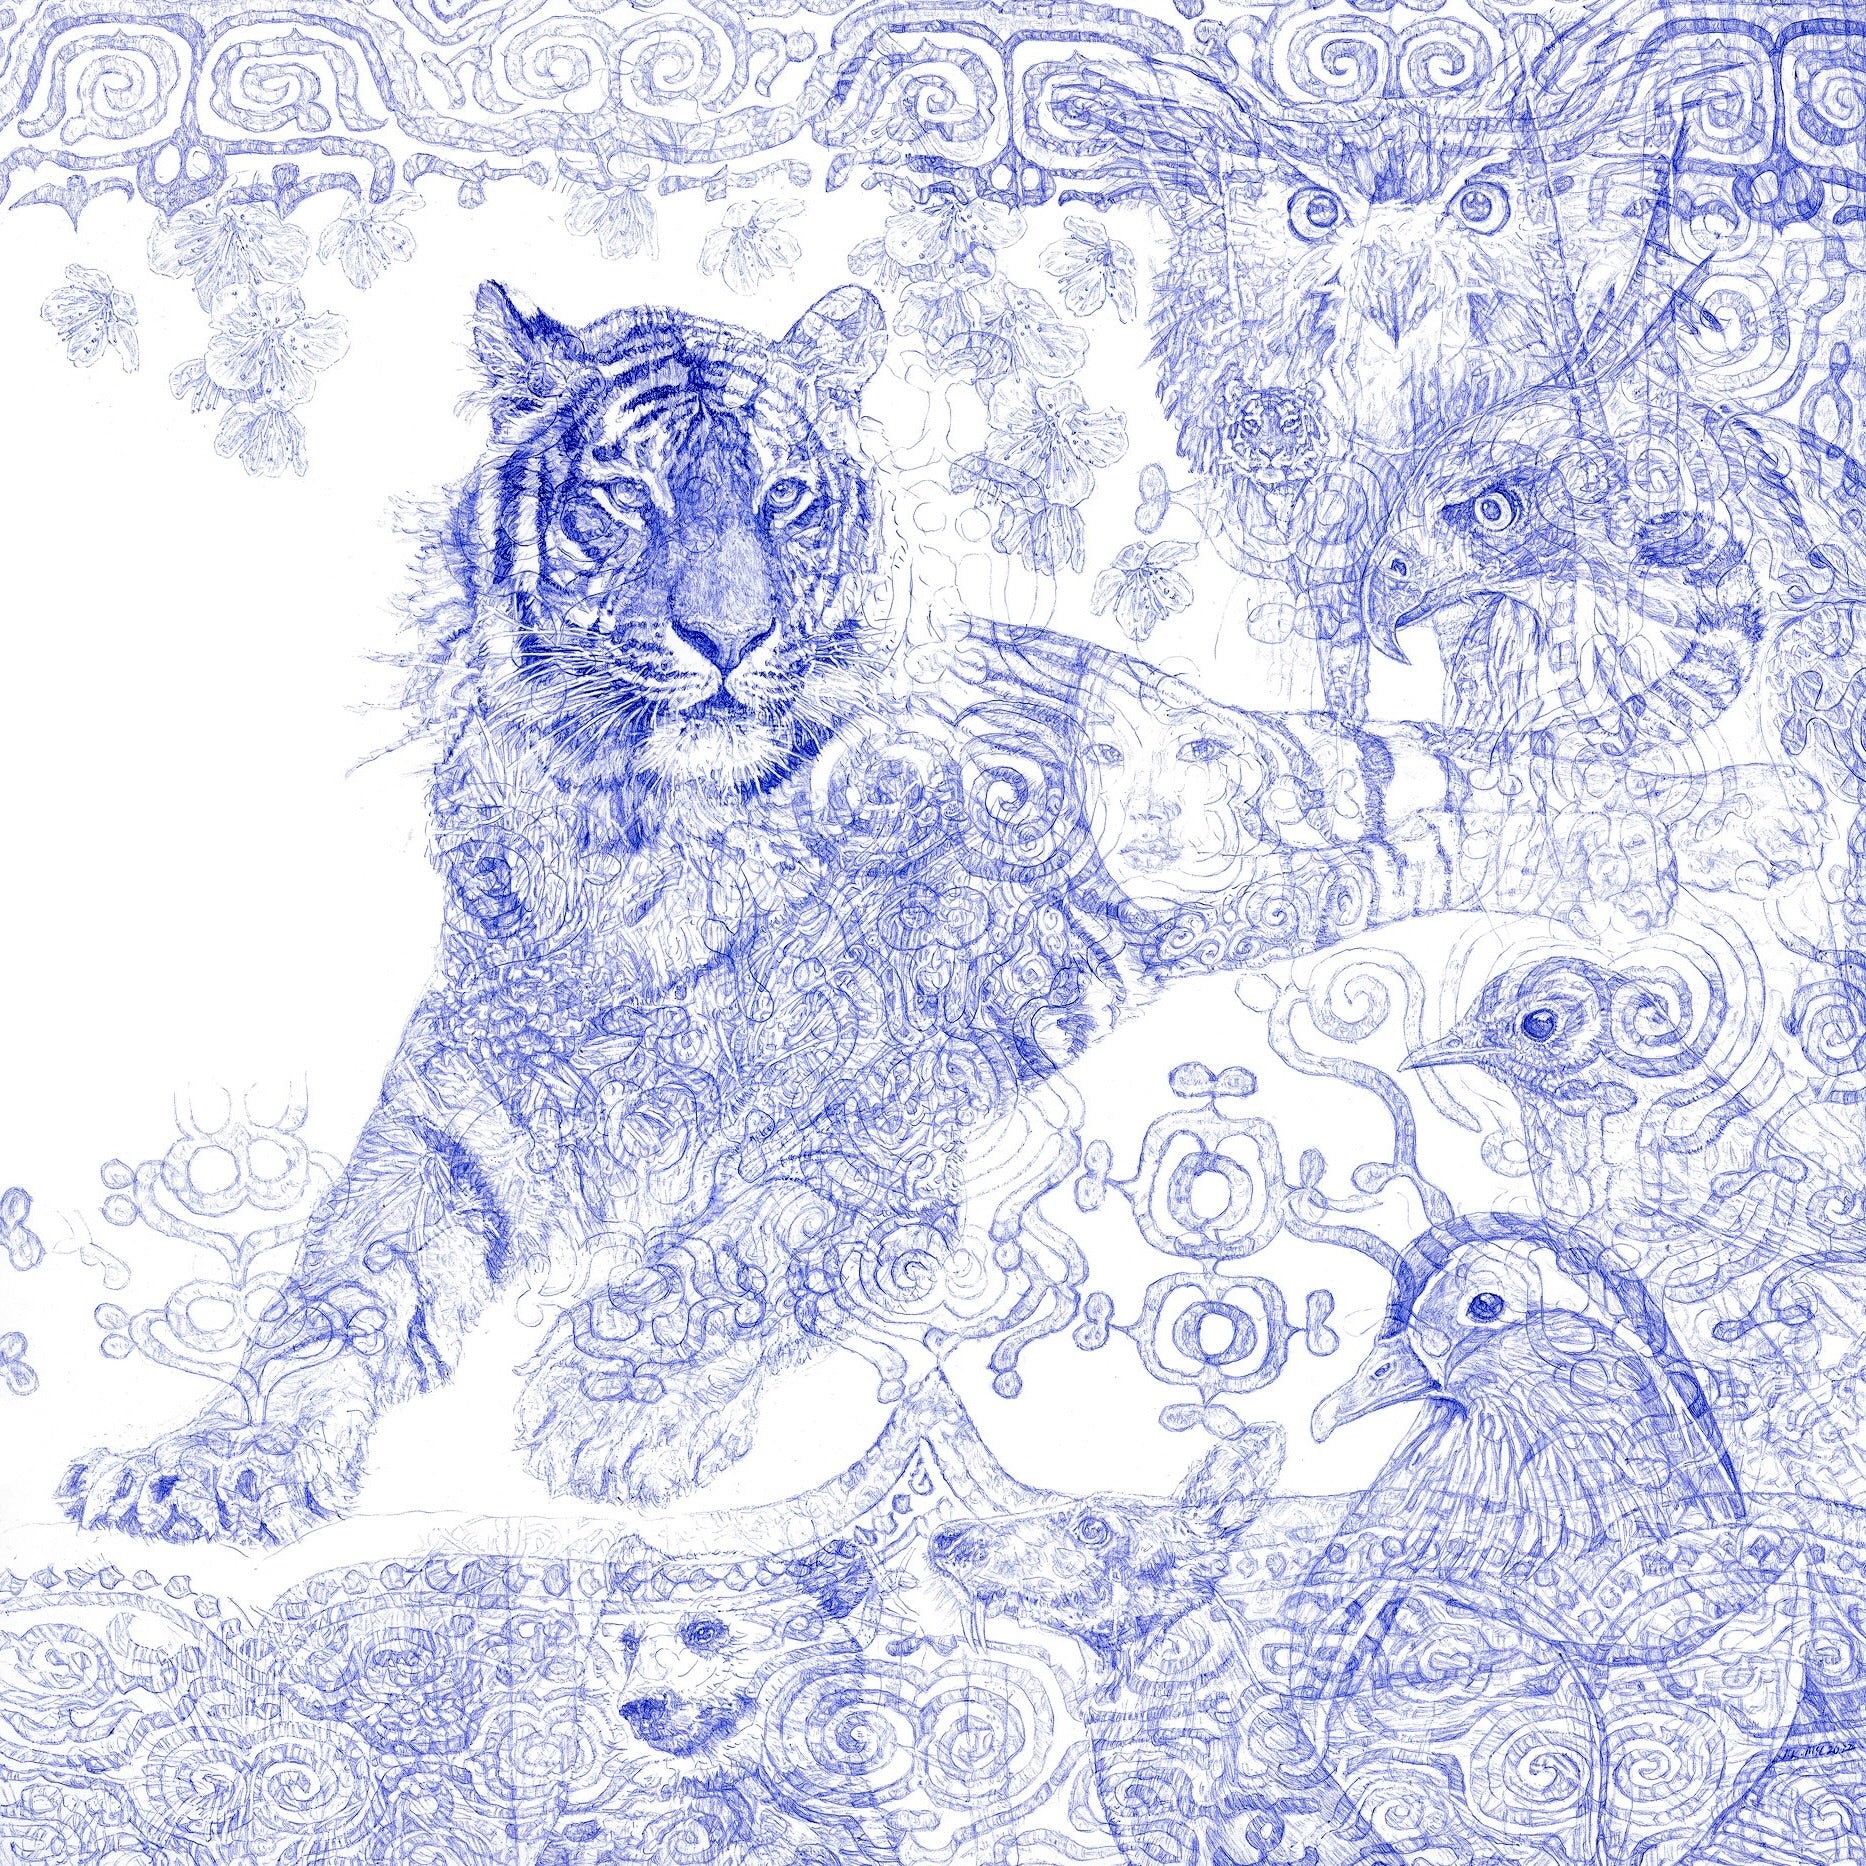 Dear Amur Tiger Limited Edition Print